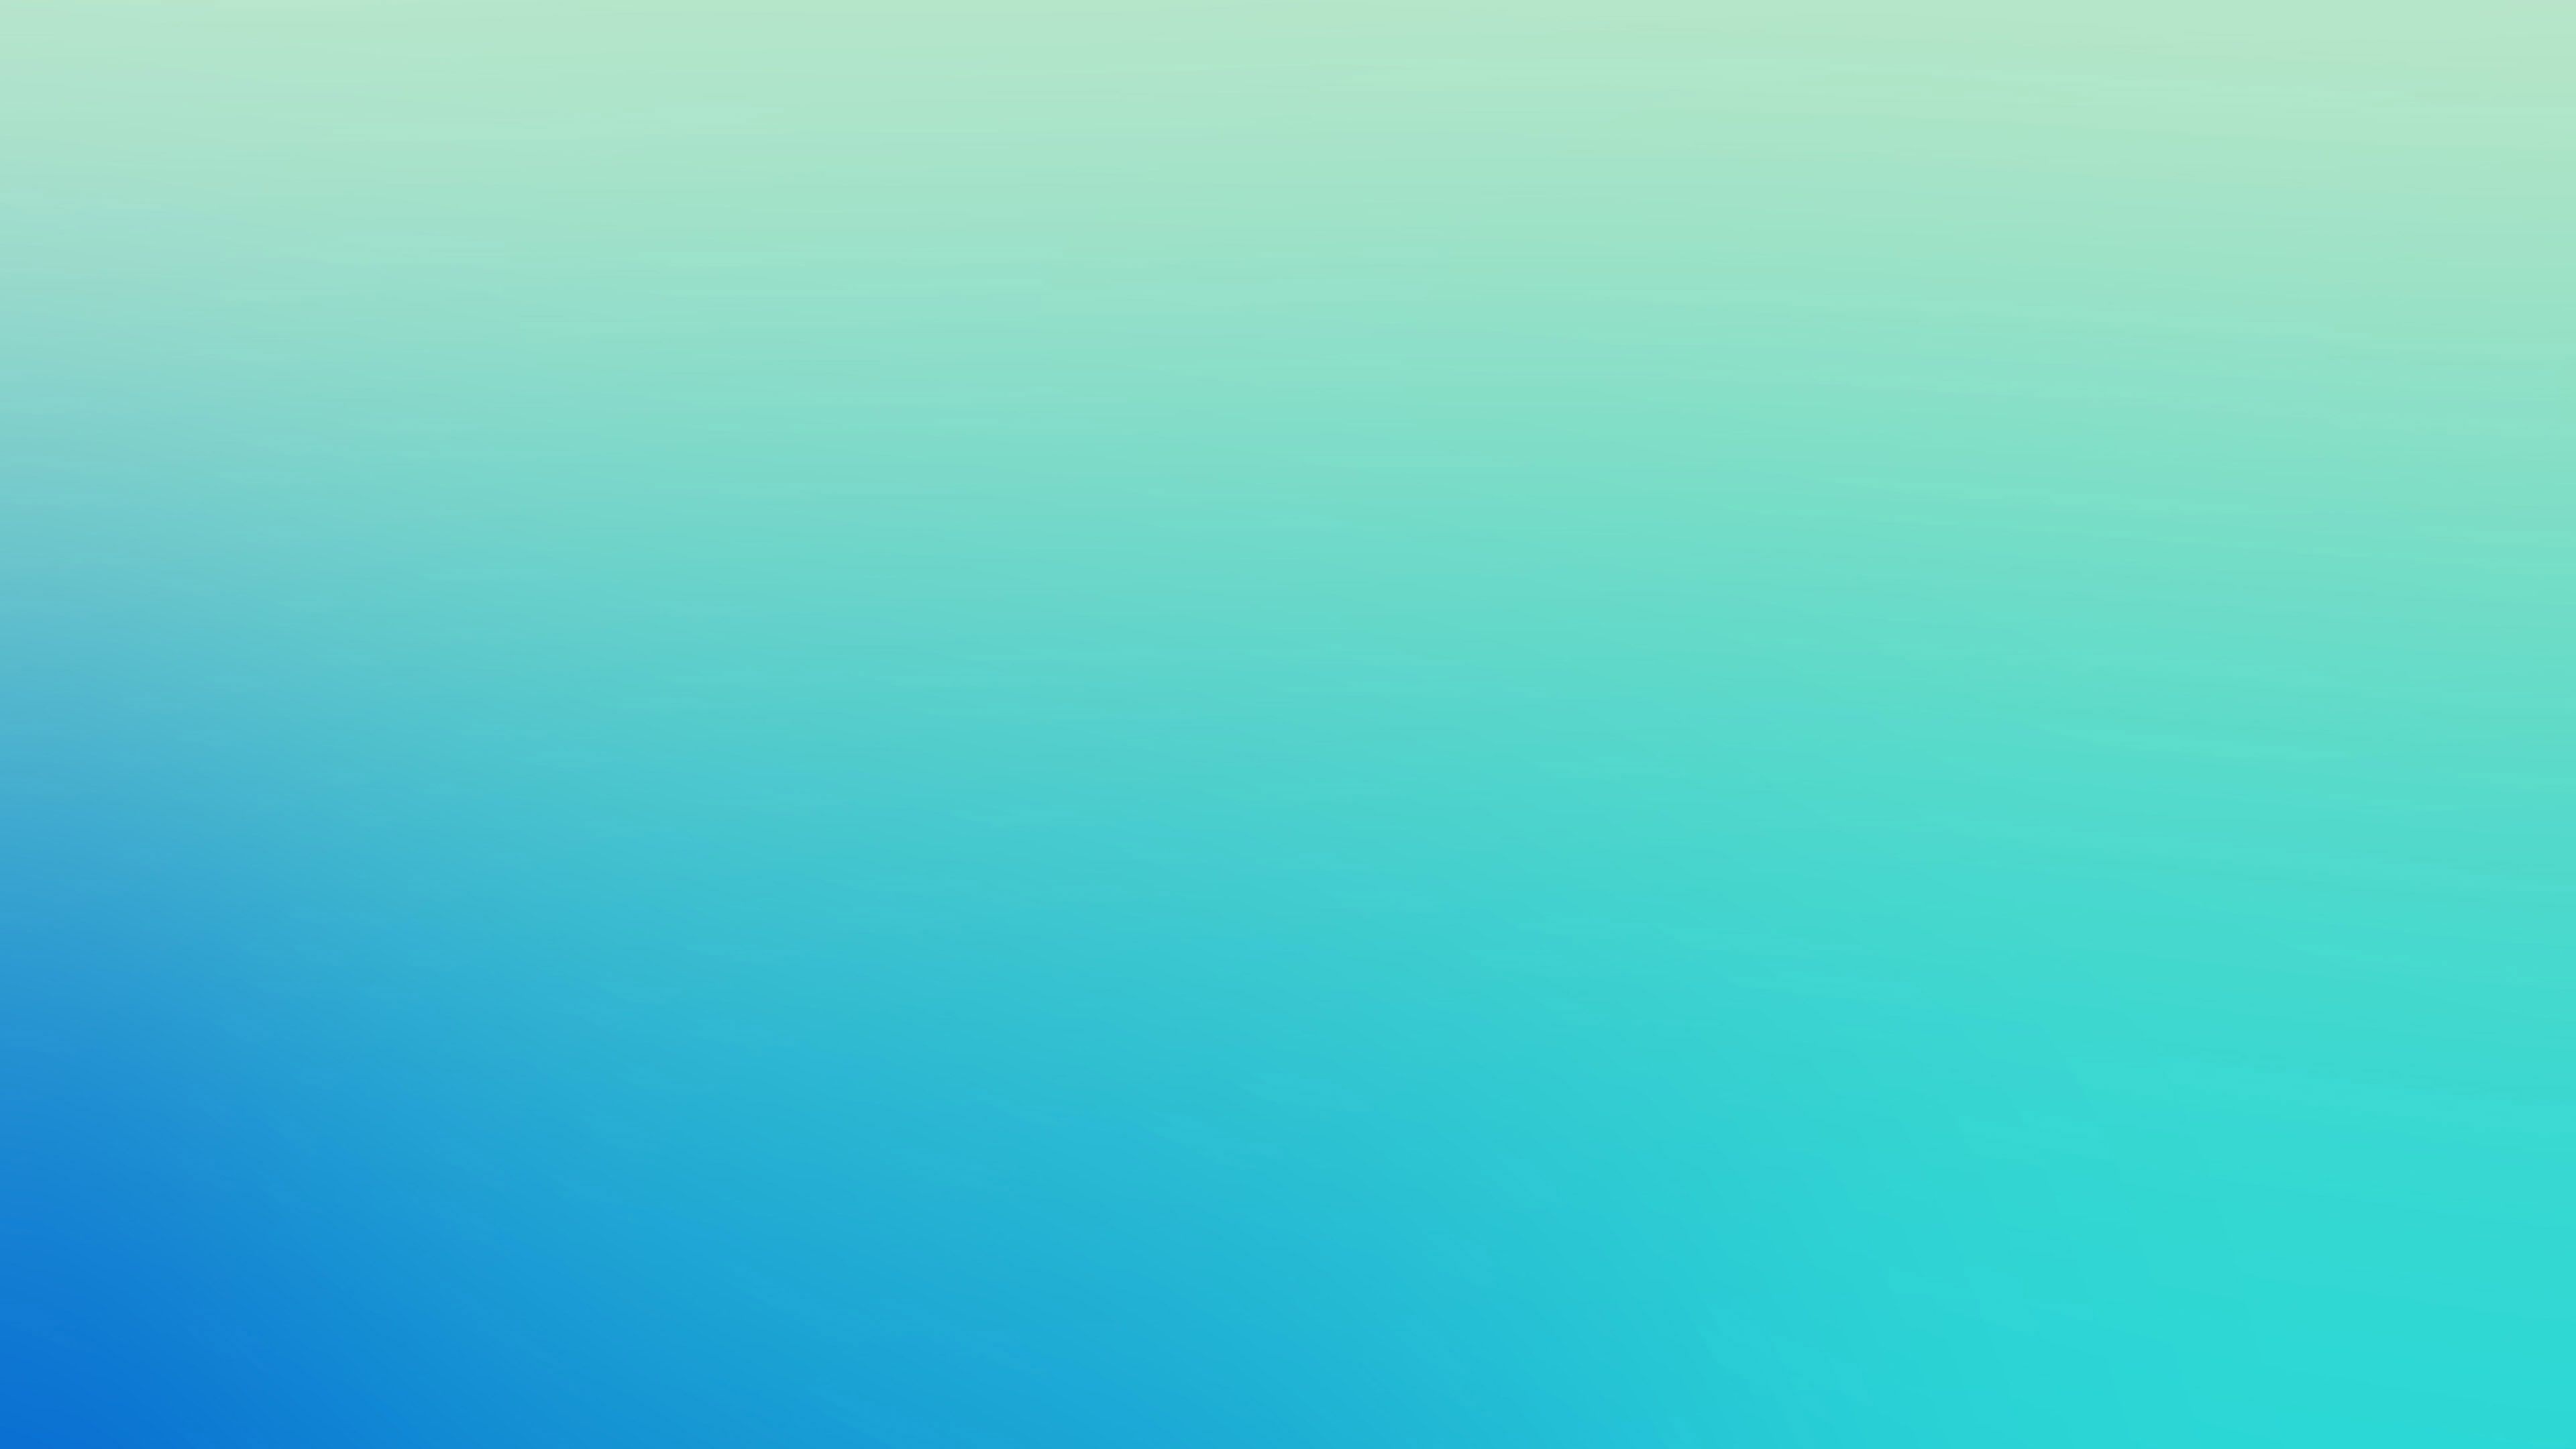 Backdrop: Light blue, Gradient, Smooth transition, Monochrome, Azure, Minimalism, Simple. 3840x2160 4K Wallpaper.